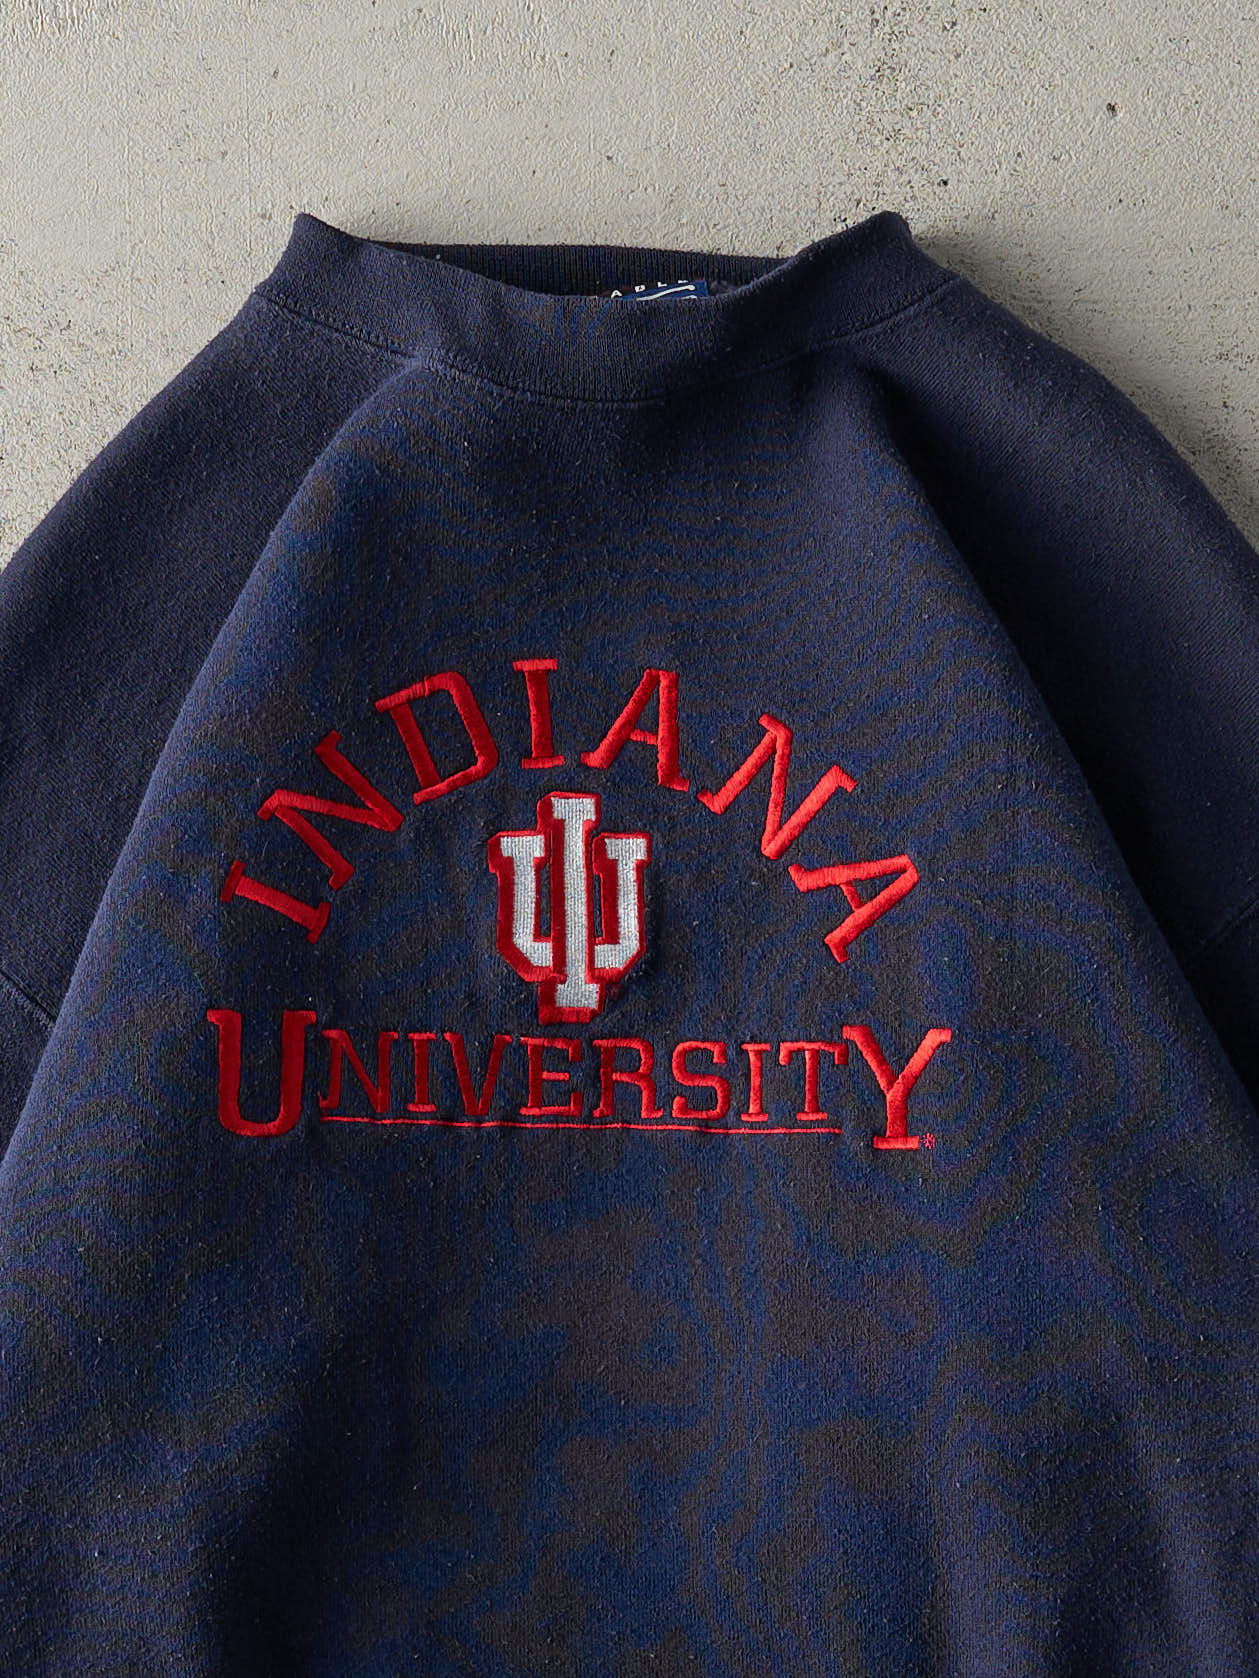 Vintage 90s Navy Blue Indiana University Crewneck (M/L)